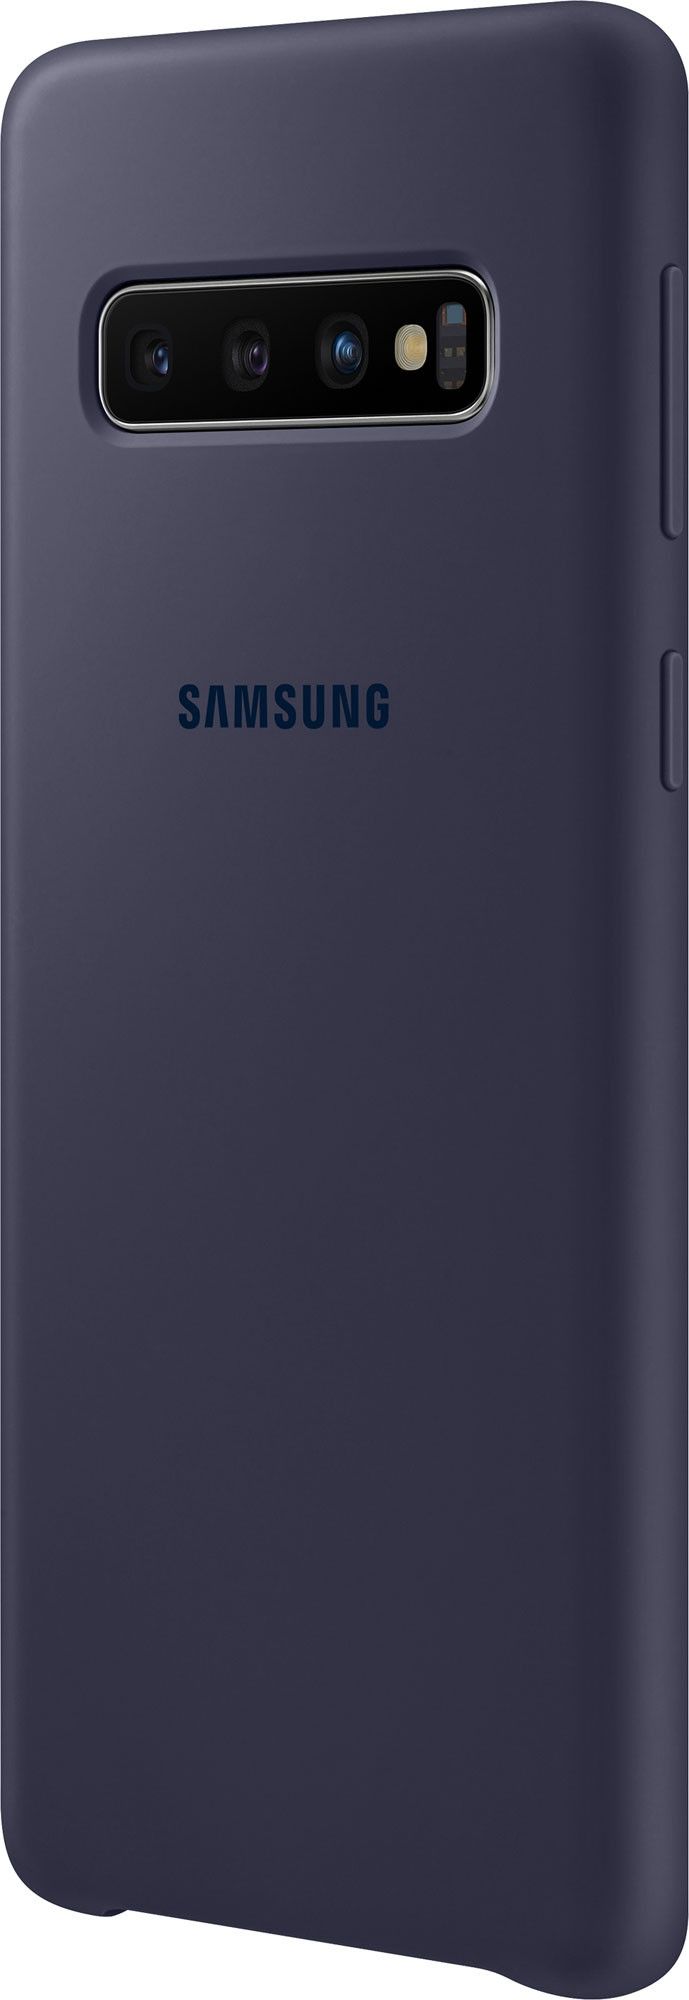 Акция на Панель Samsung Silicone Cover для Samsung Galaxy S10 (EF-PG973TNEGRU) Navy от Територія твоєї техніки - 3